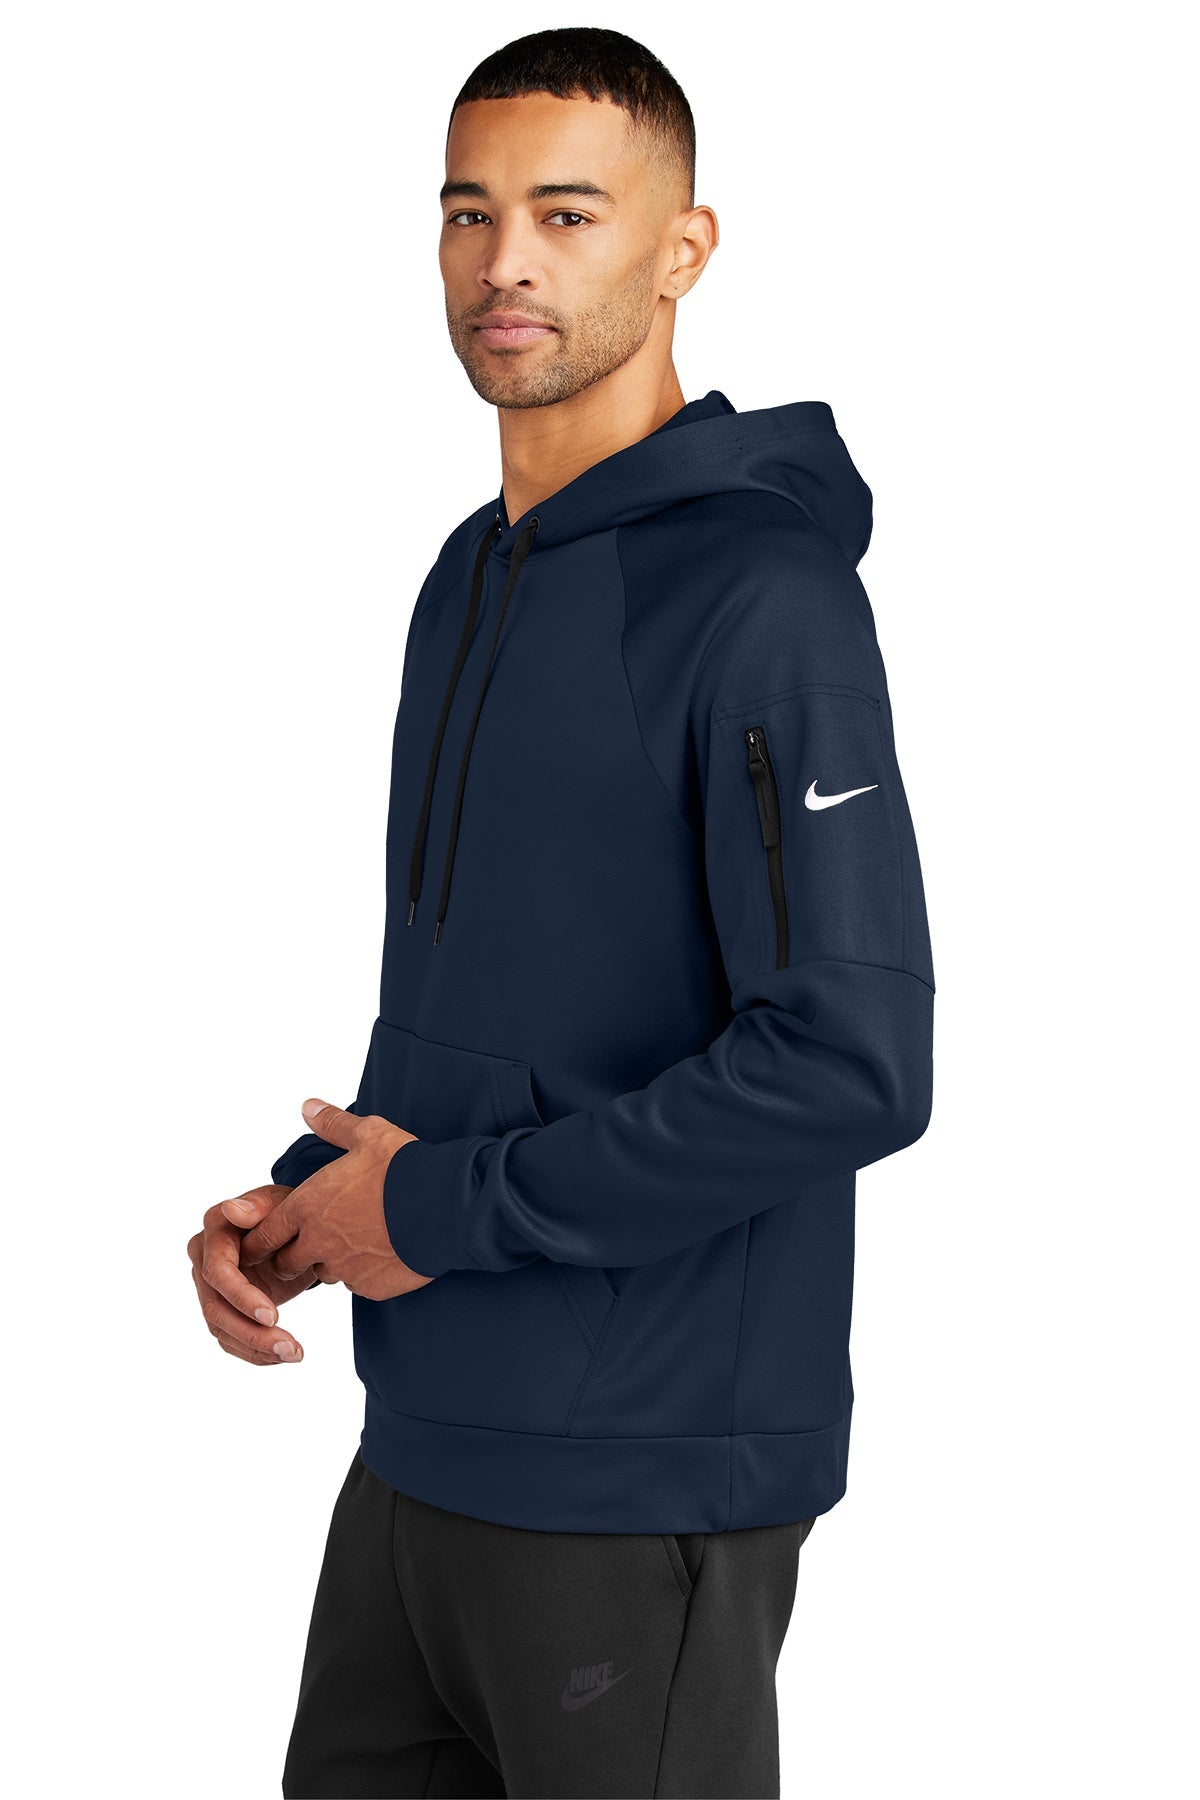 Nike Therma-FIT Pocket Pullover Branded Hoodies, Navy